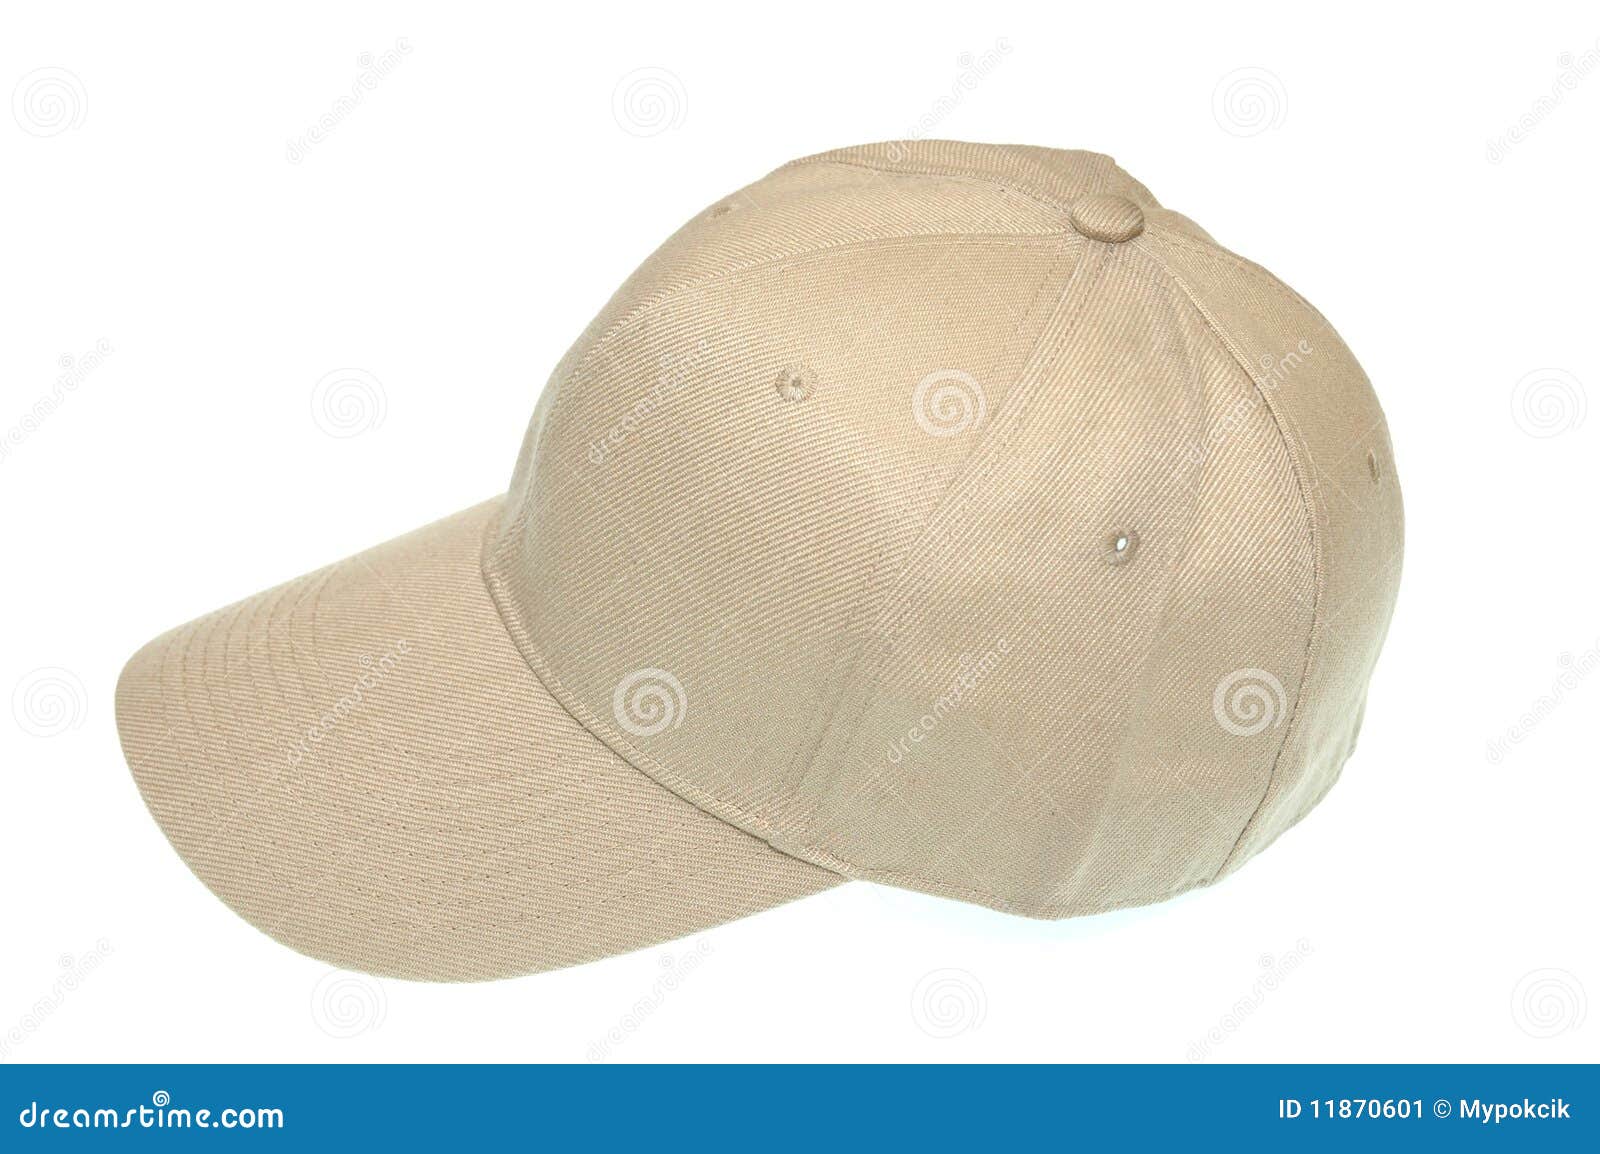 Baseball cap stock image. Image of texture, symbol, material - 11870601